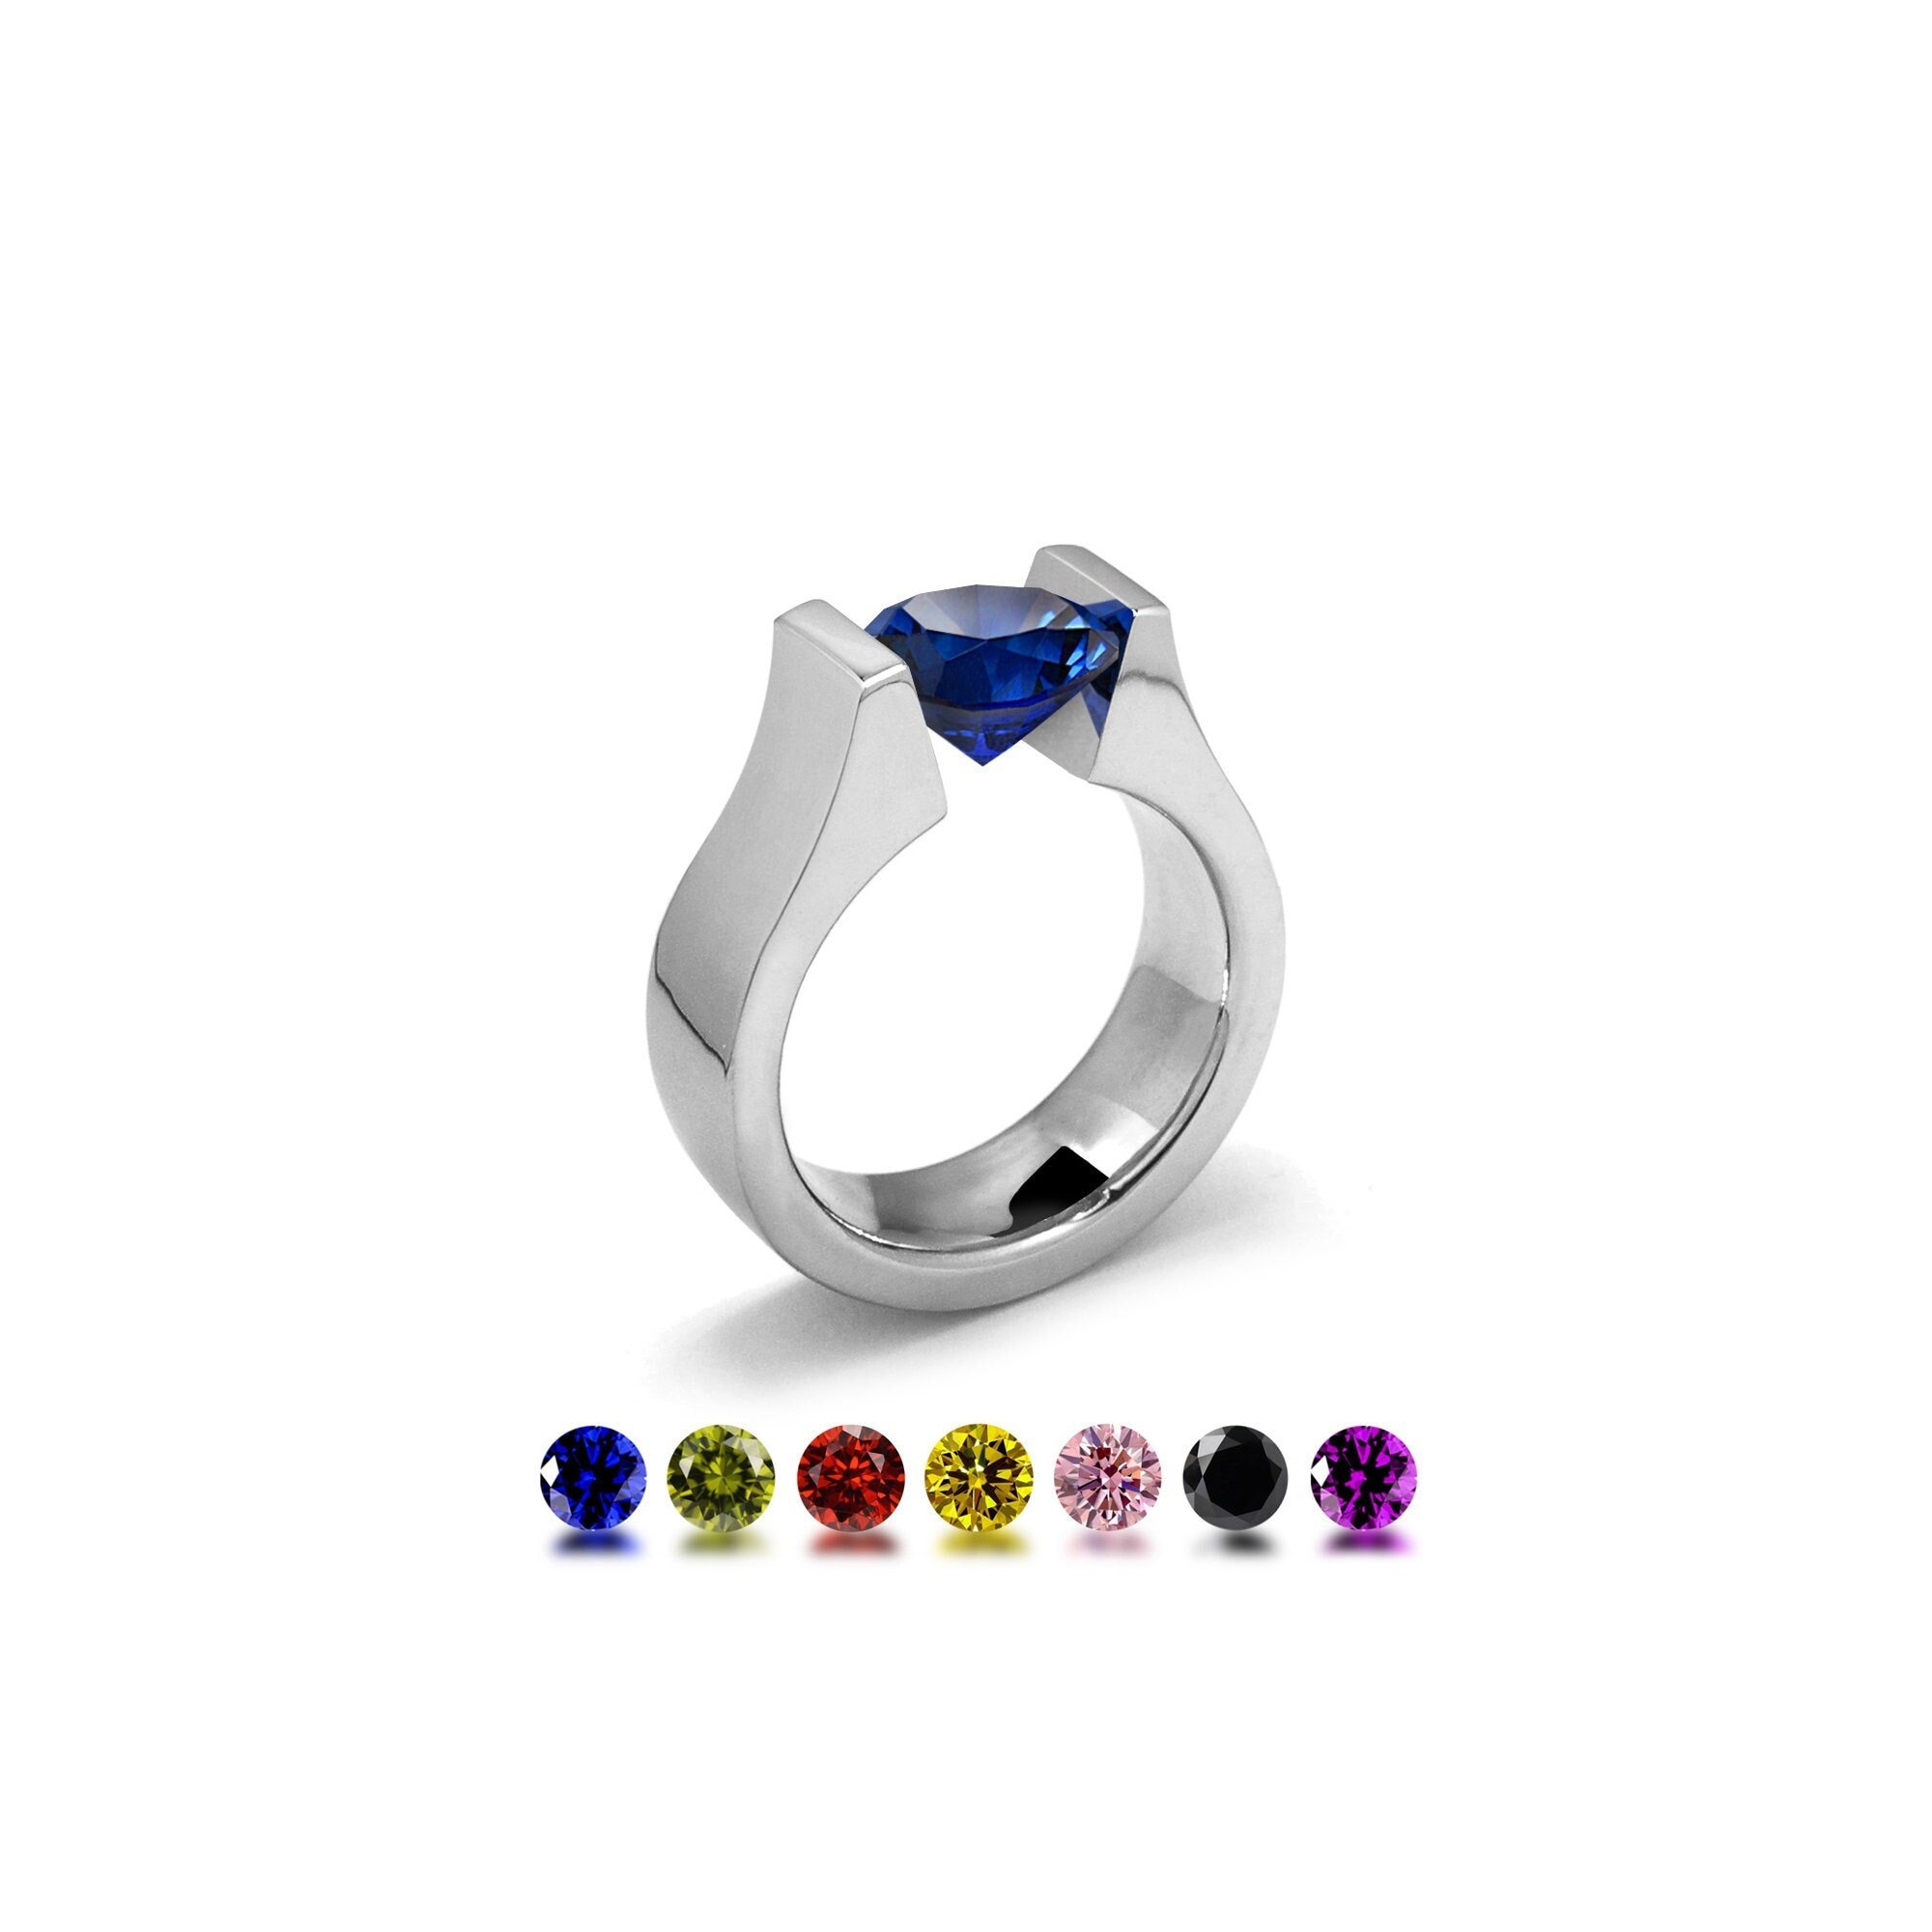 Pave Set Engagement Rings - Oklahoma Pave Set Bridal Ring